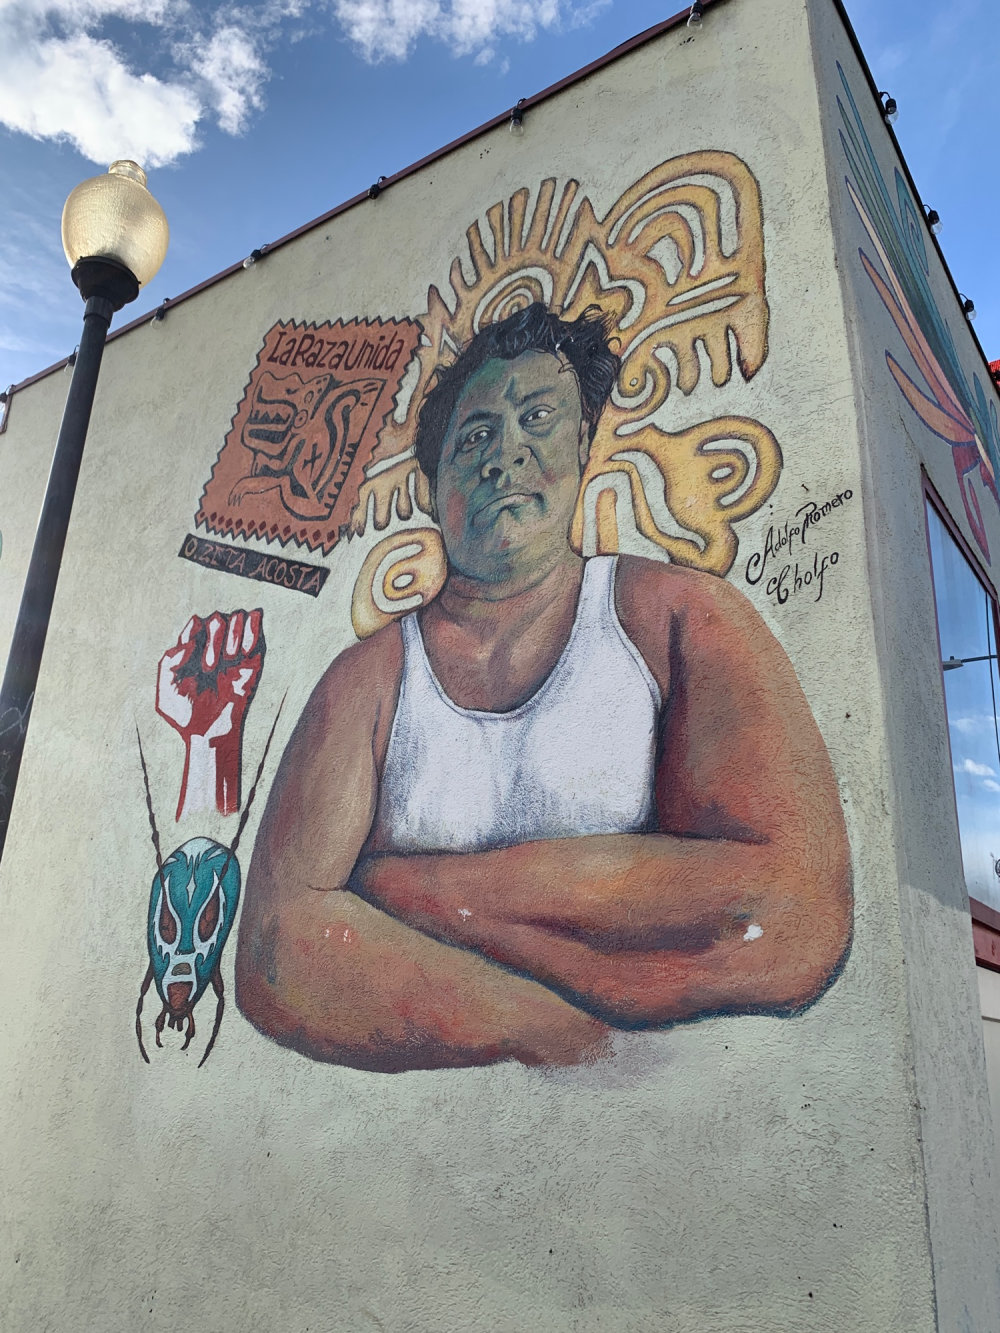 mural in Denver by artist Adolfo Romero.